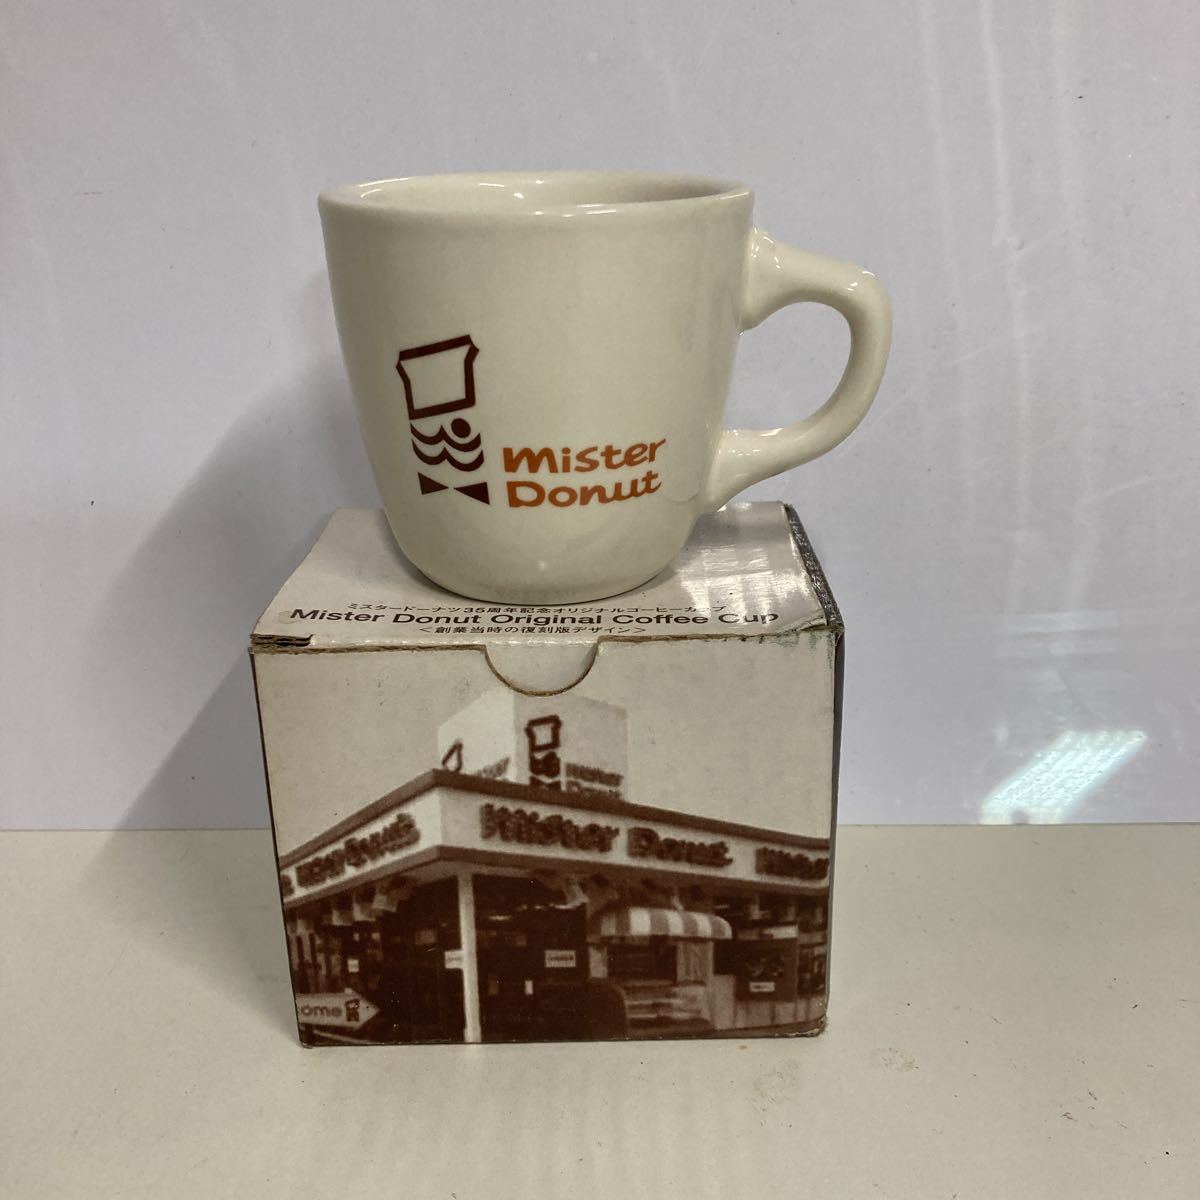  mug Mister Donut reprint coffee cup mistake do35 anniversary commemoration 